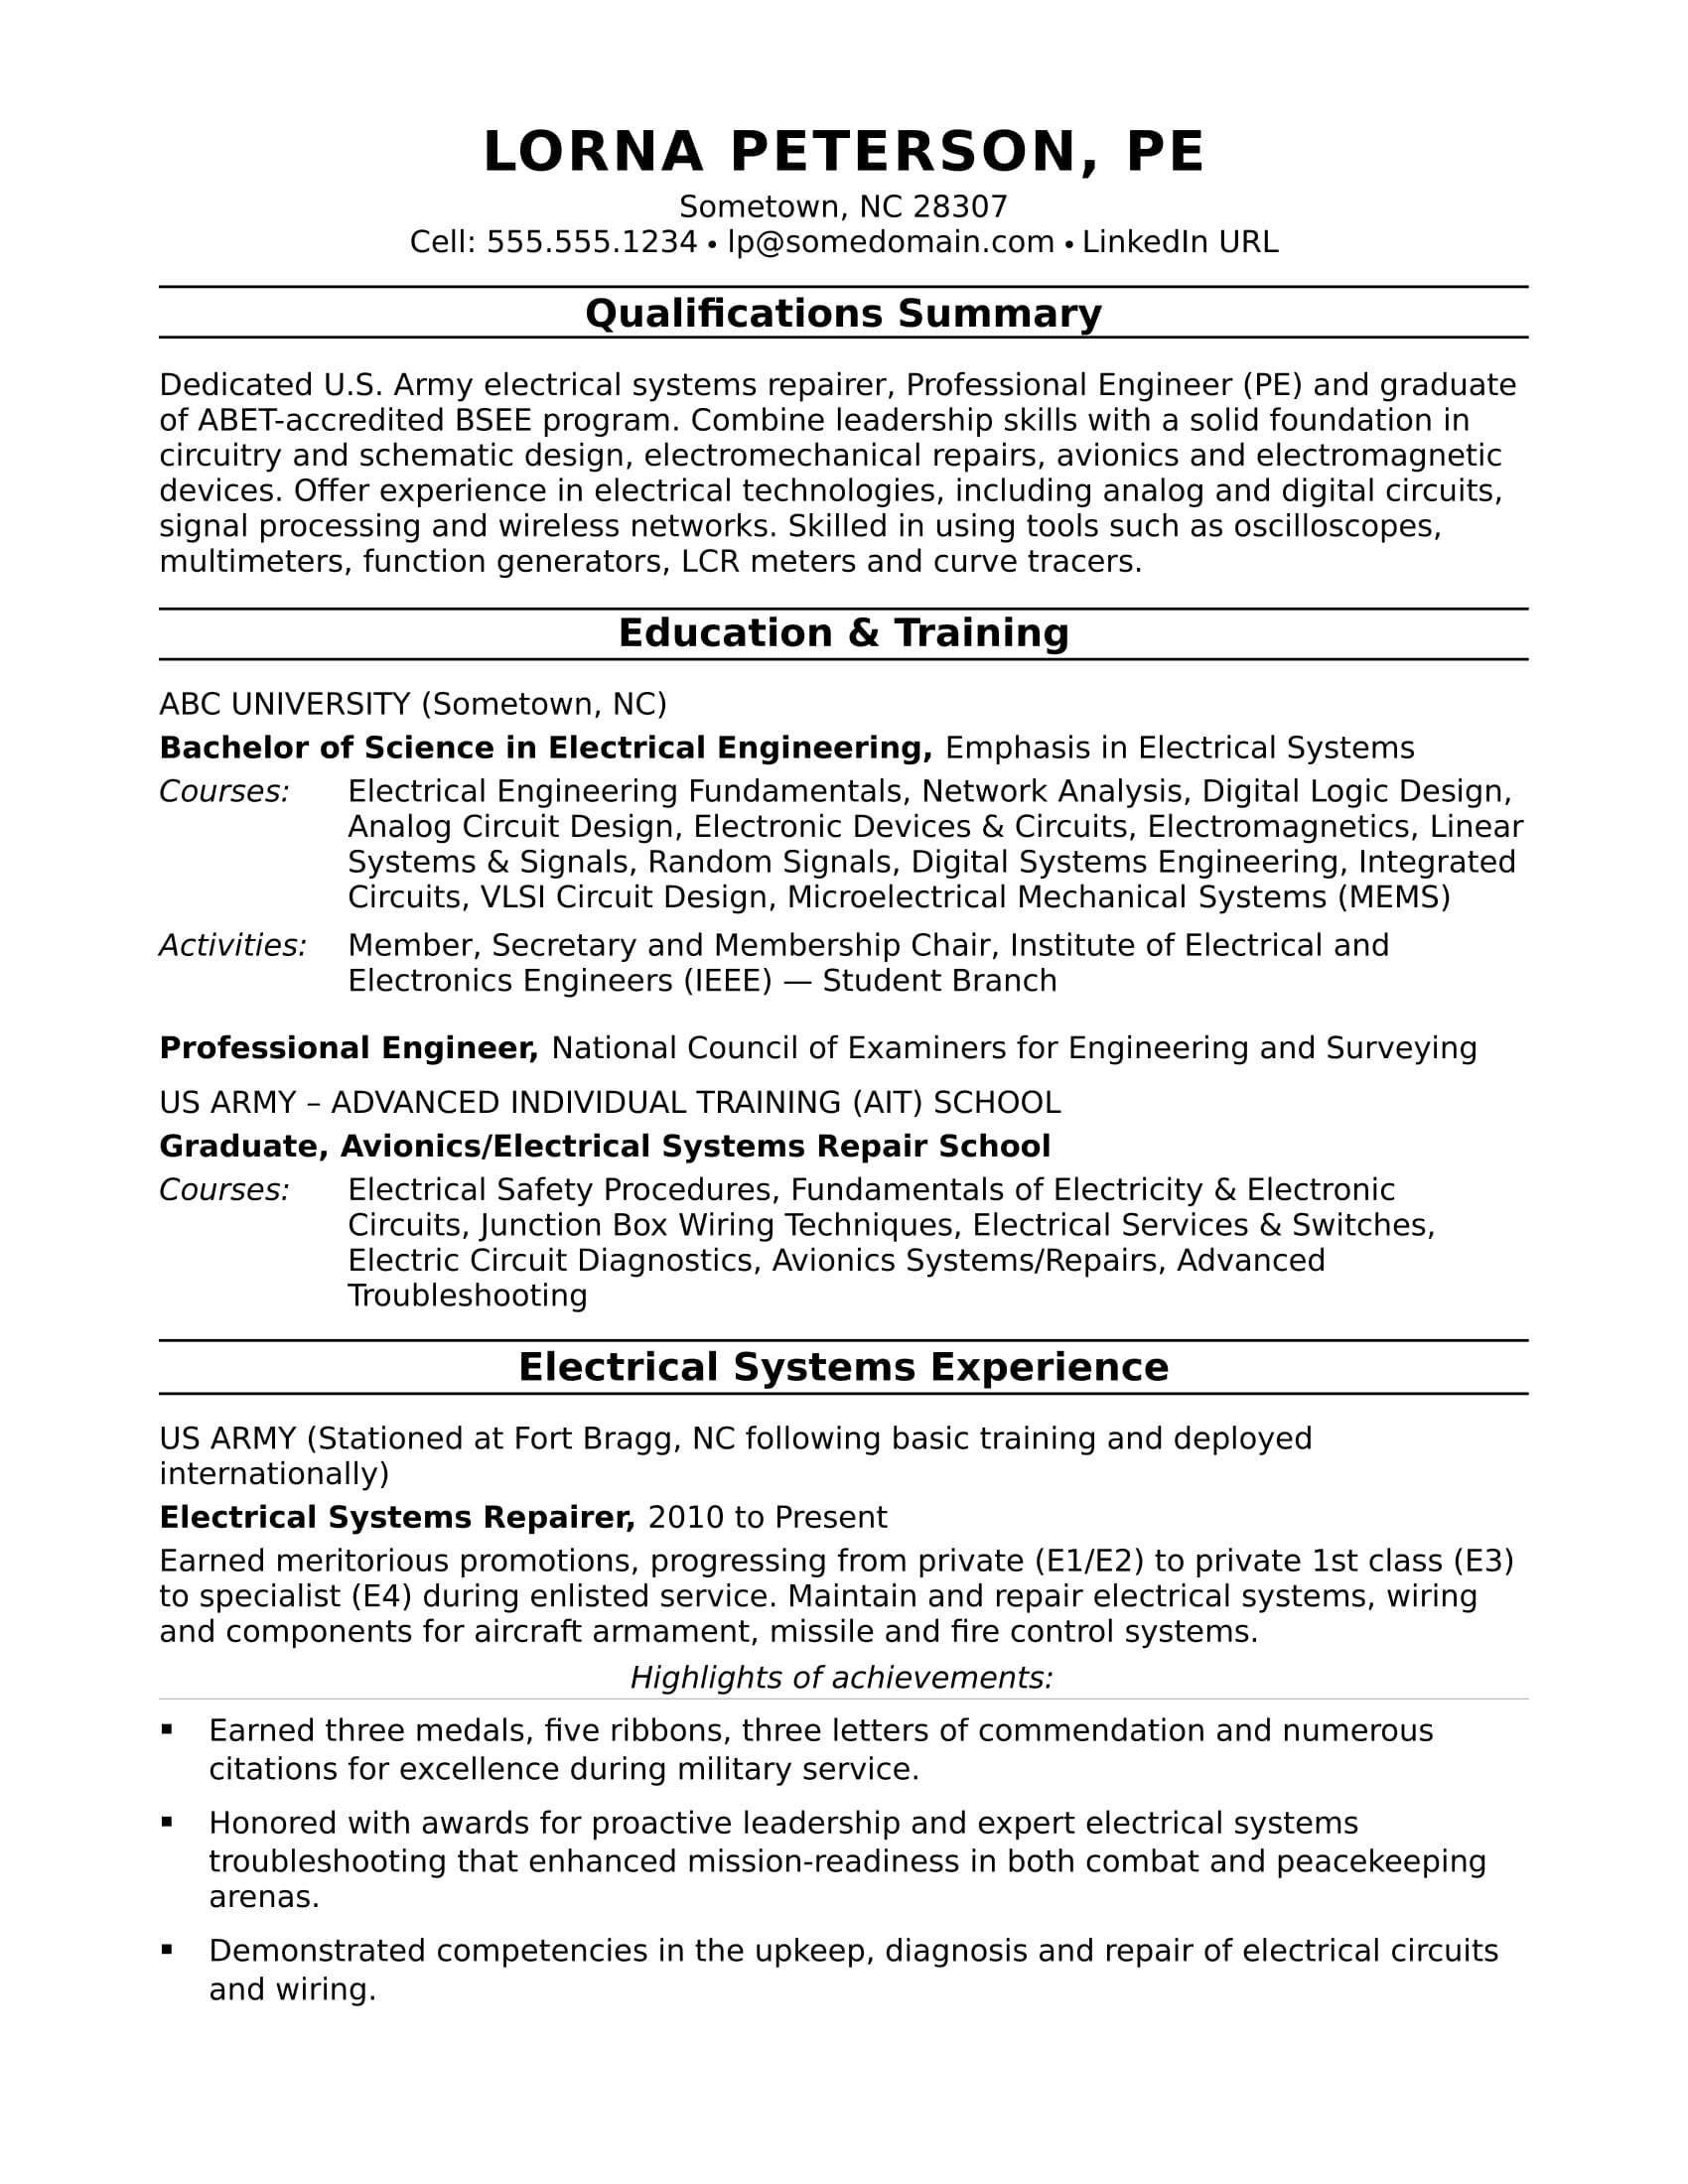 Sample Resume for a Midlevel Electrical Engineer | Monster.com